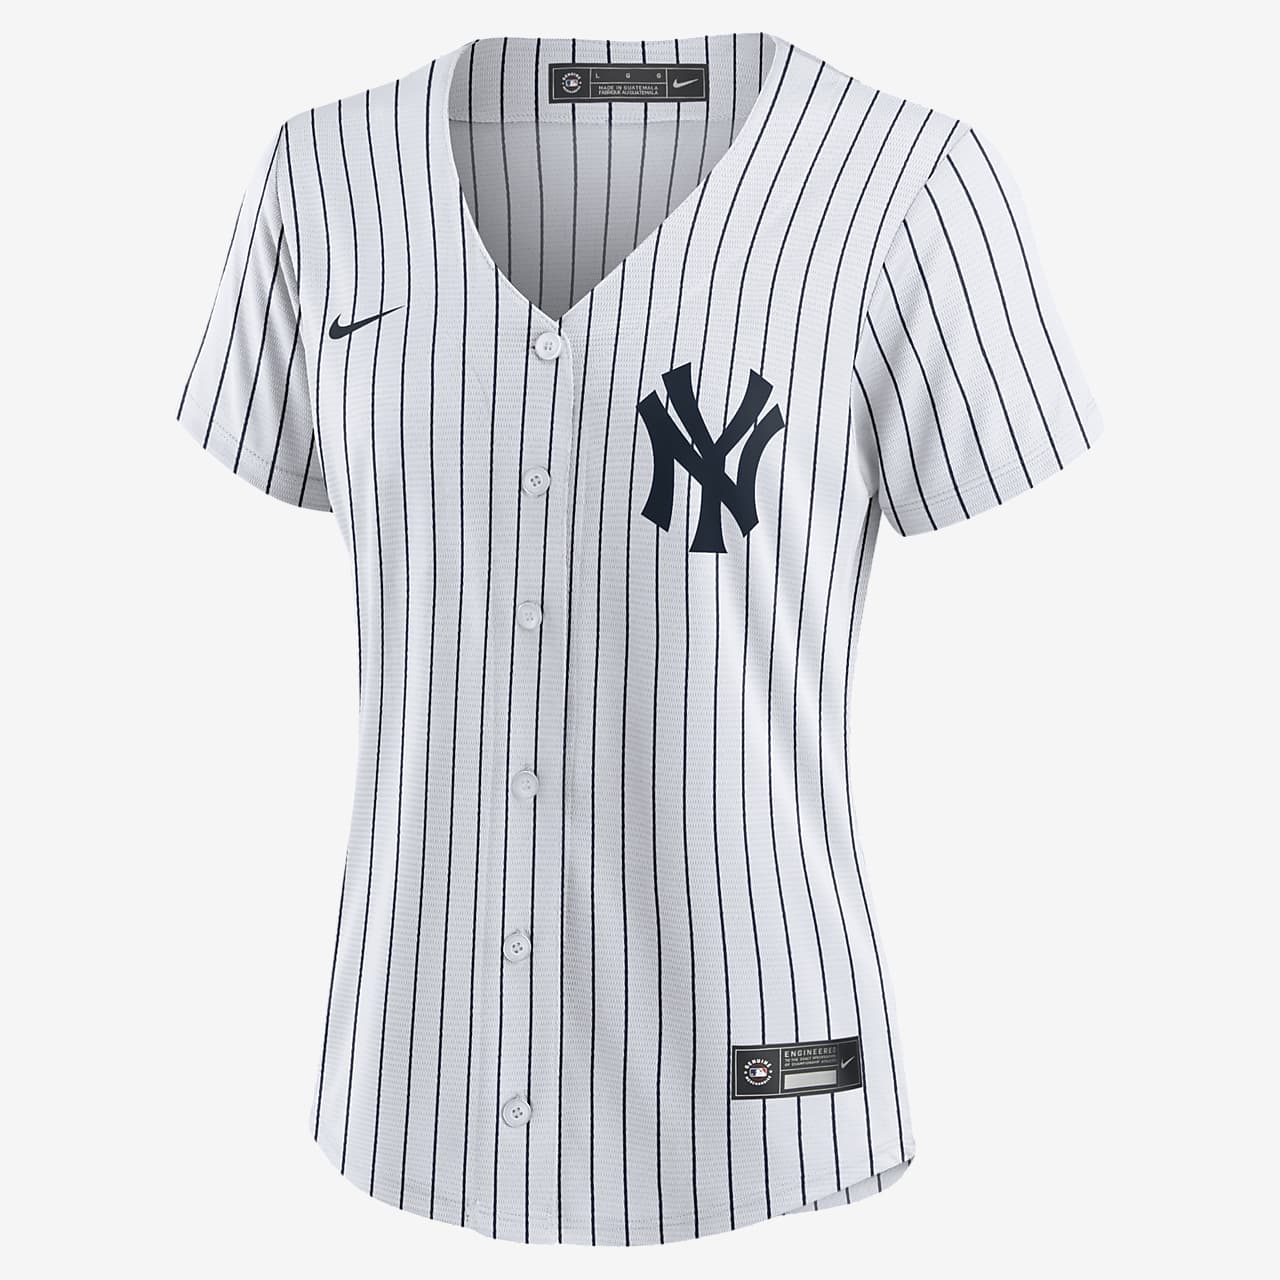 MLB New York Yankees (Giancarlo Stanton) Women's Replica Baseball Jersey